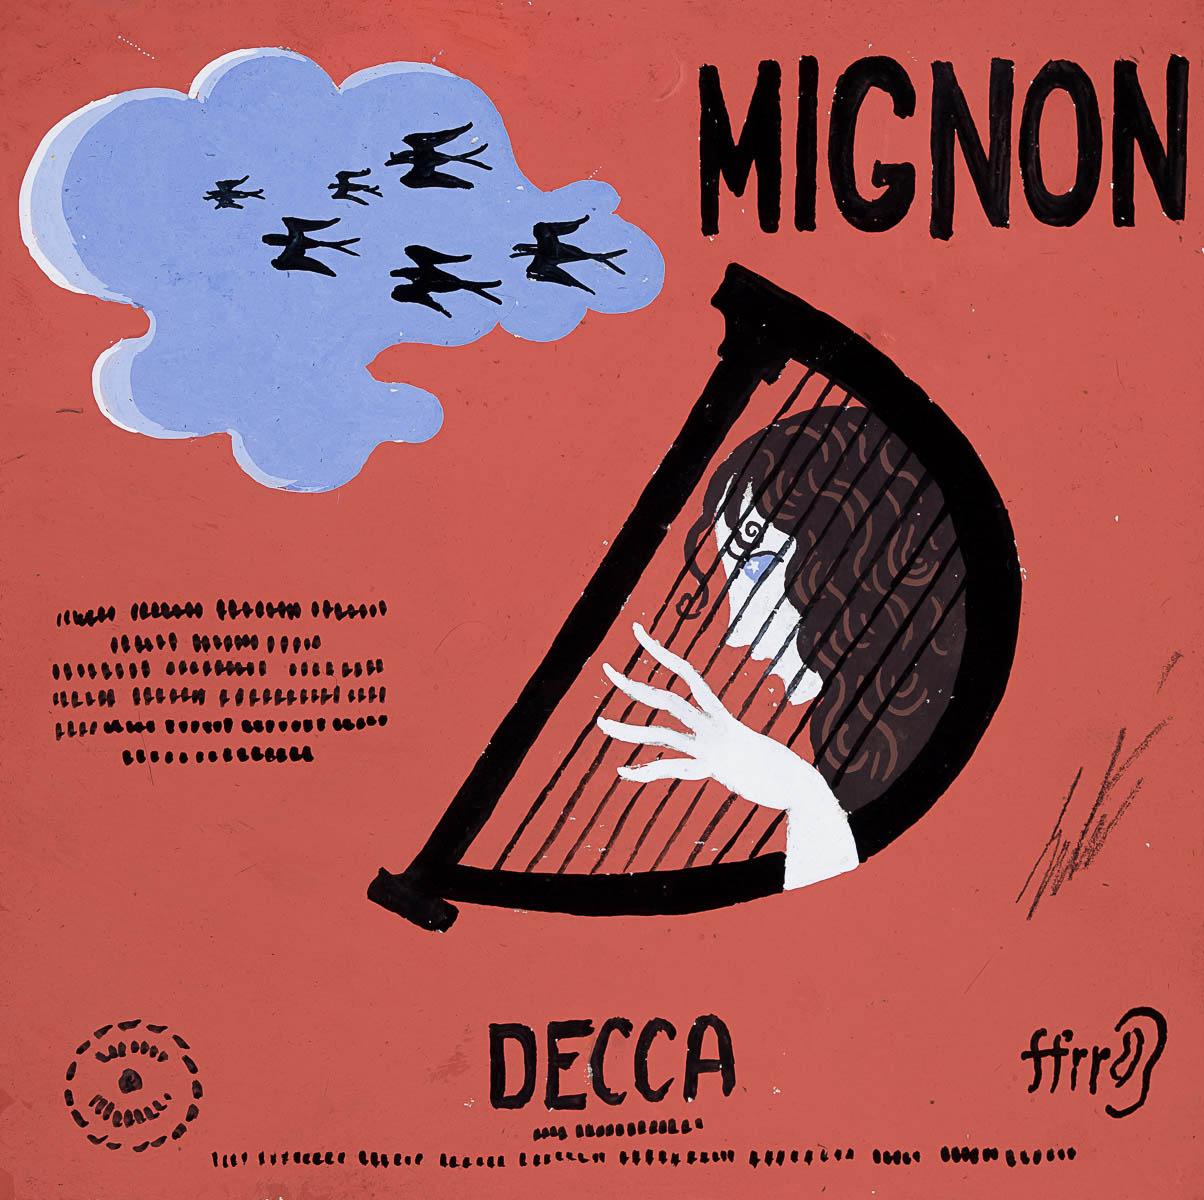 "Mignon" Decca-Entwurf